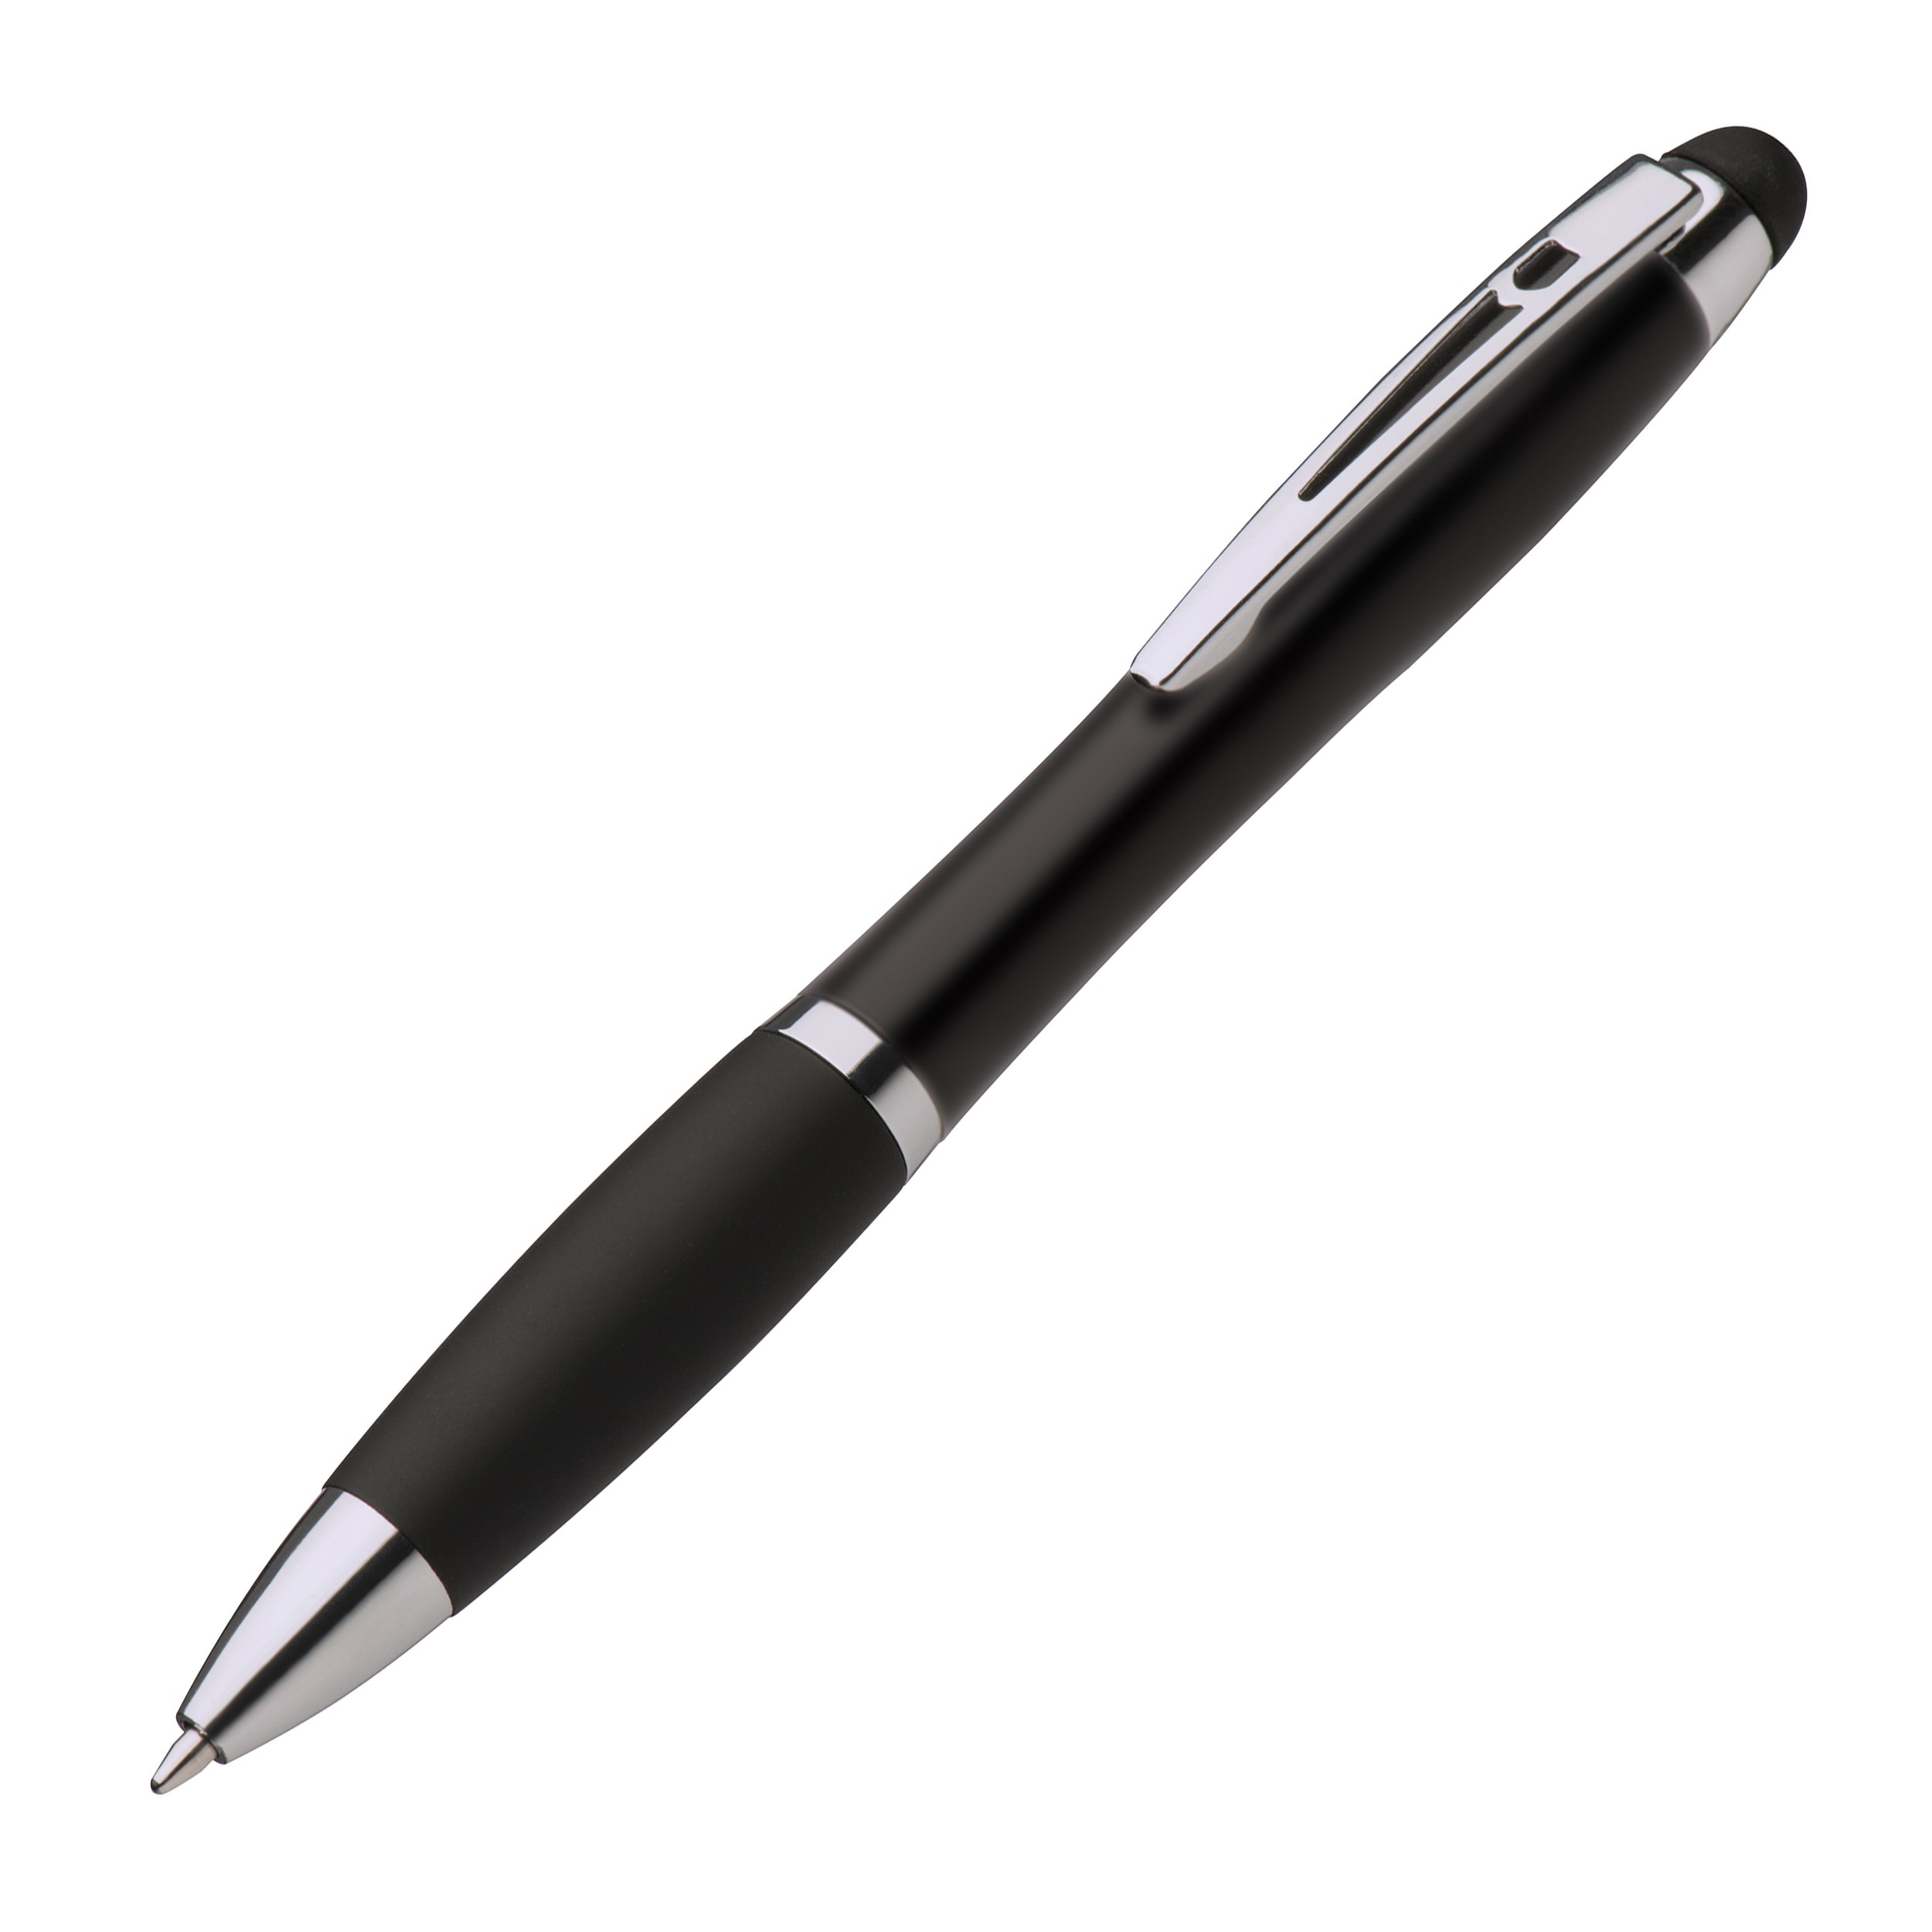 Kugelschreiber mit Touch-Pen La Nucia